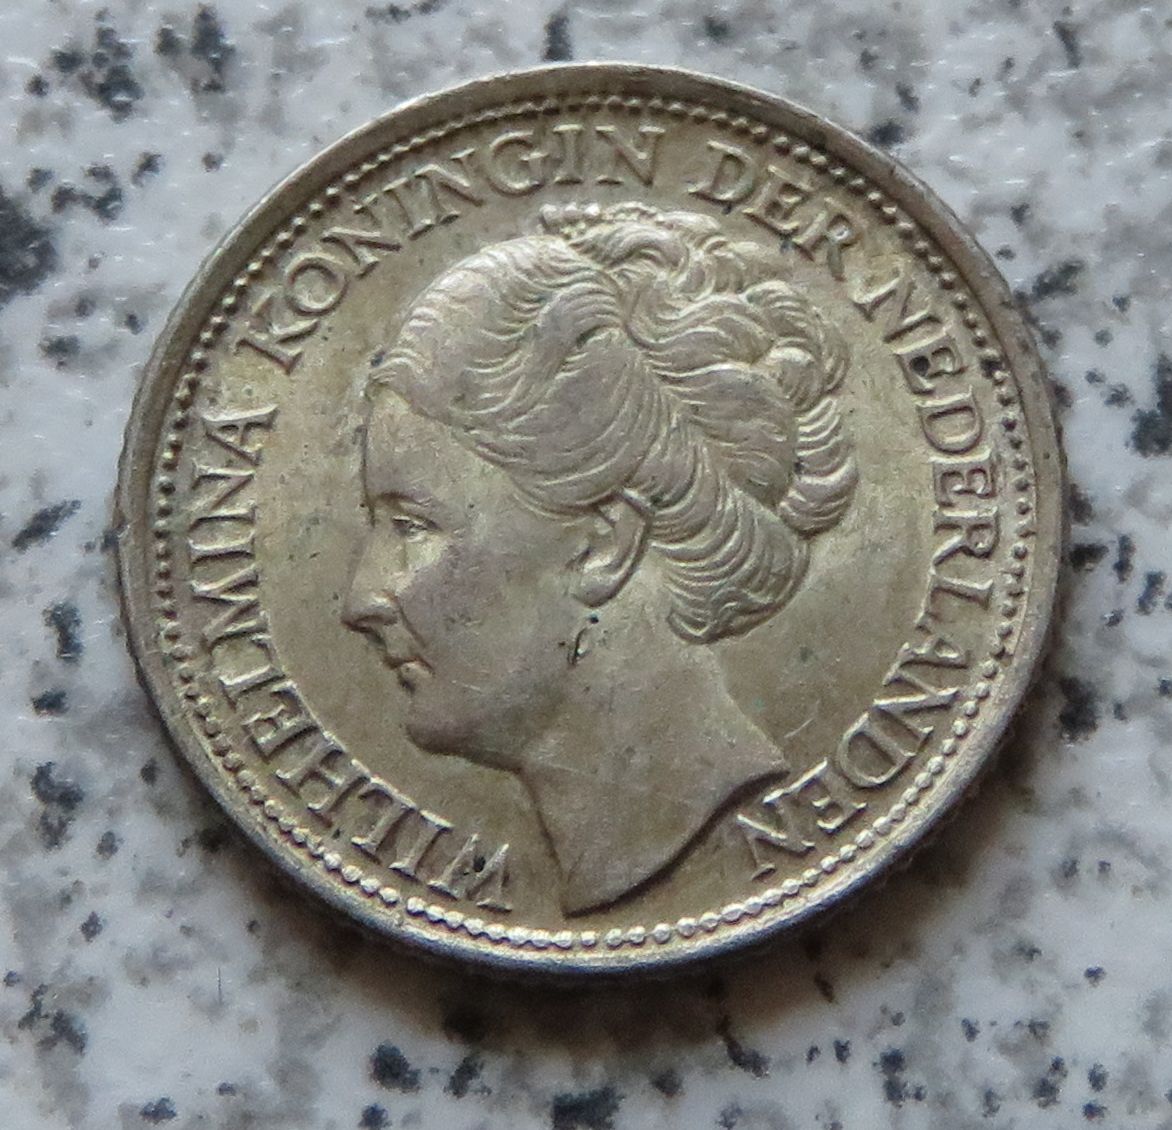  Niederlande 10 Cents 1944 P   